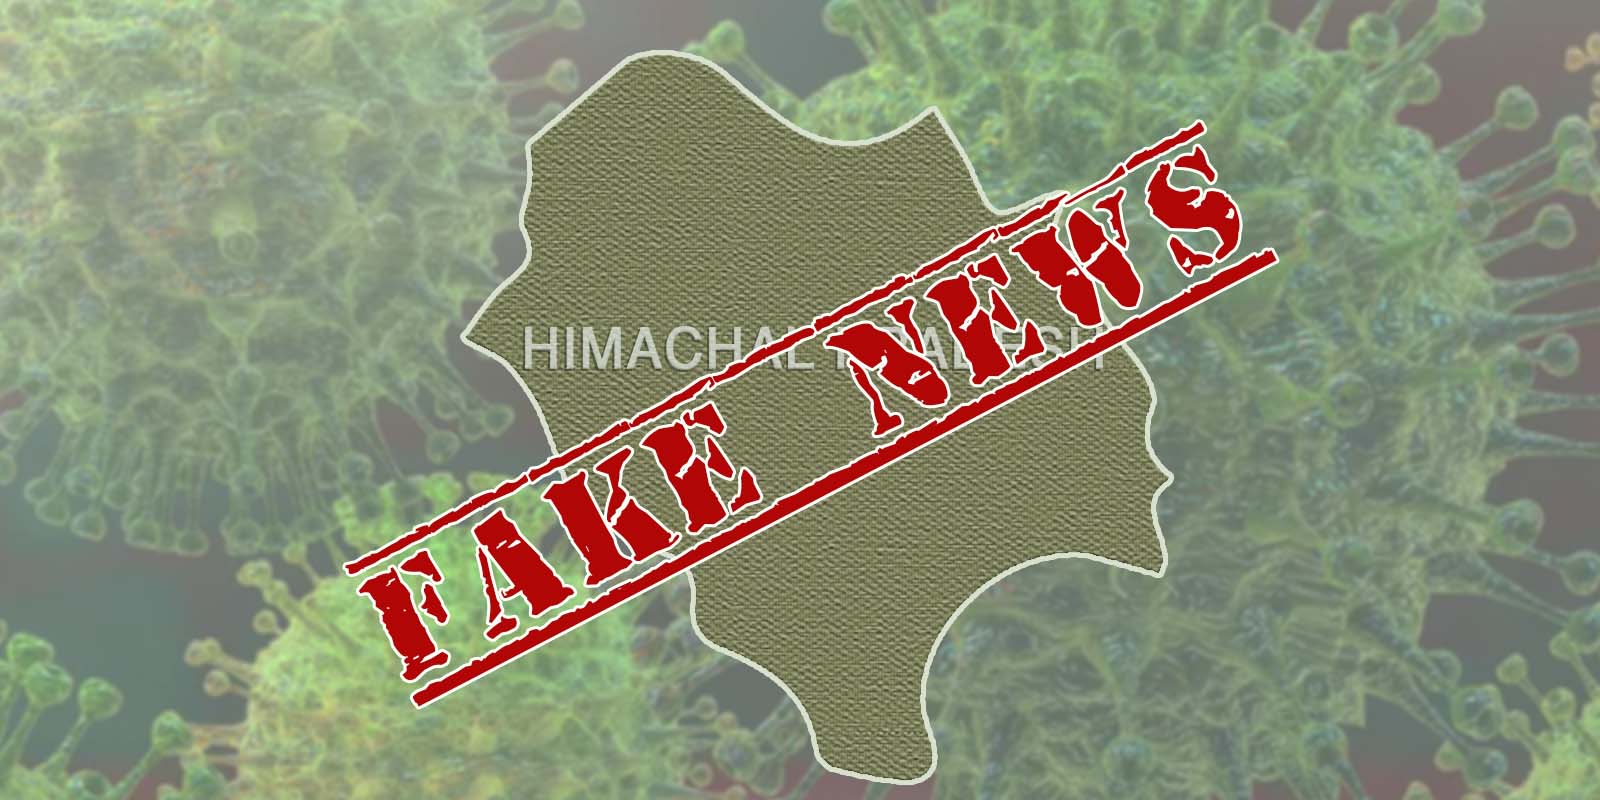 curfew in himachal pradesh rumour